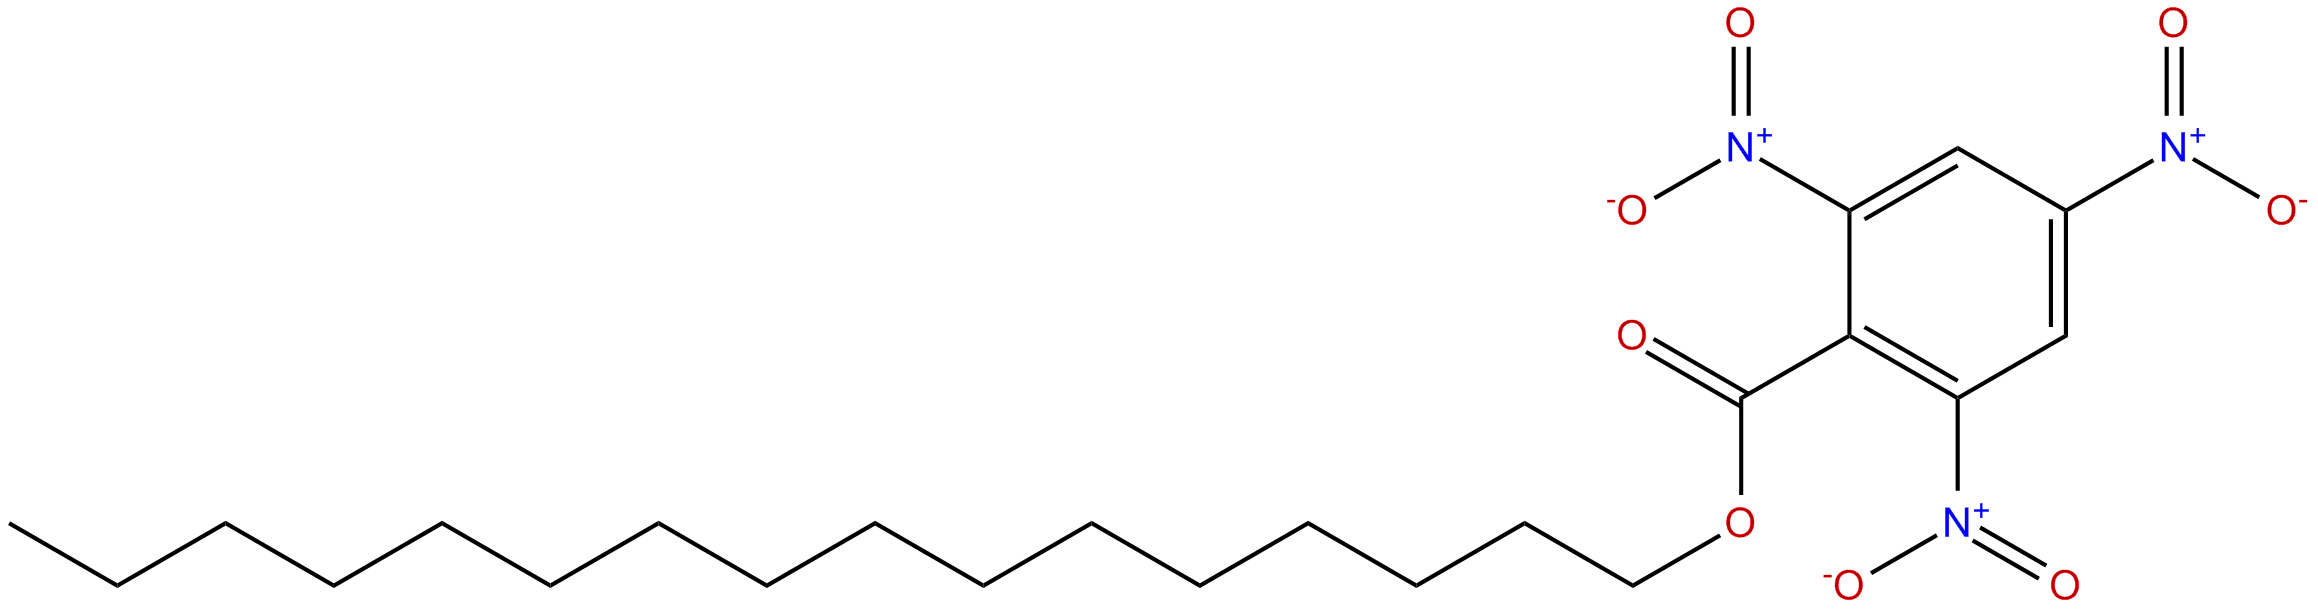 Image of hexadecyl 2,4,6-trinitrobenzoate